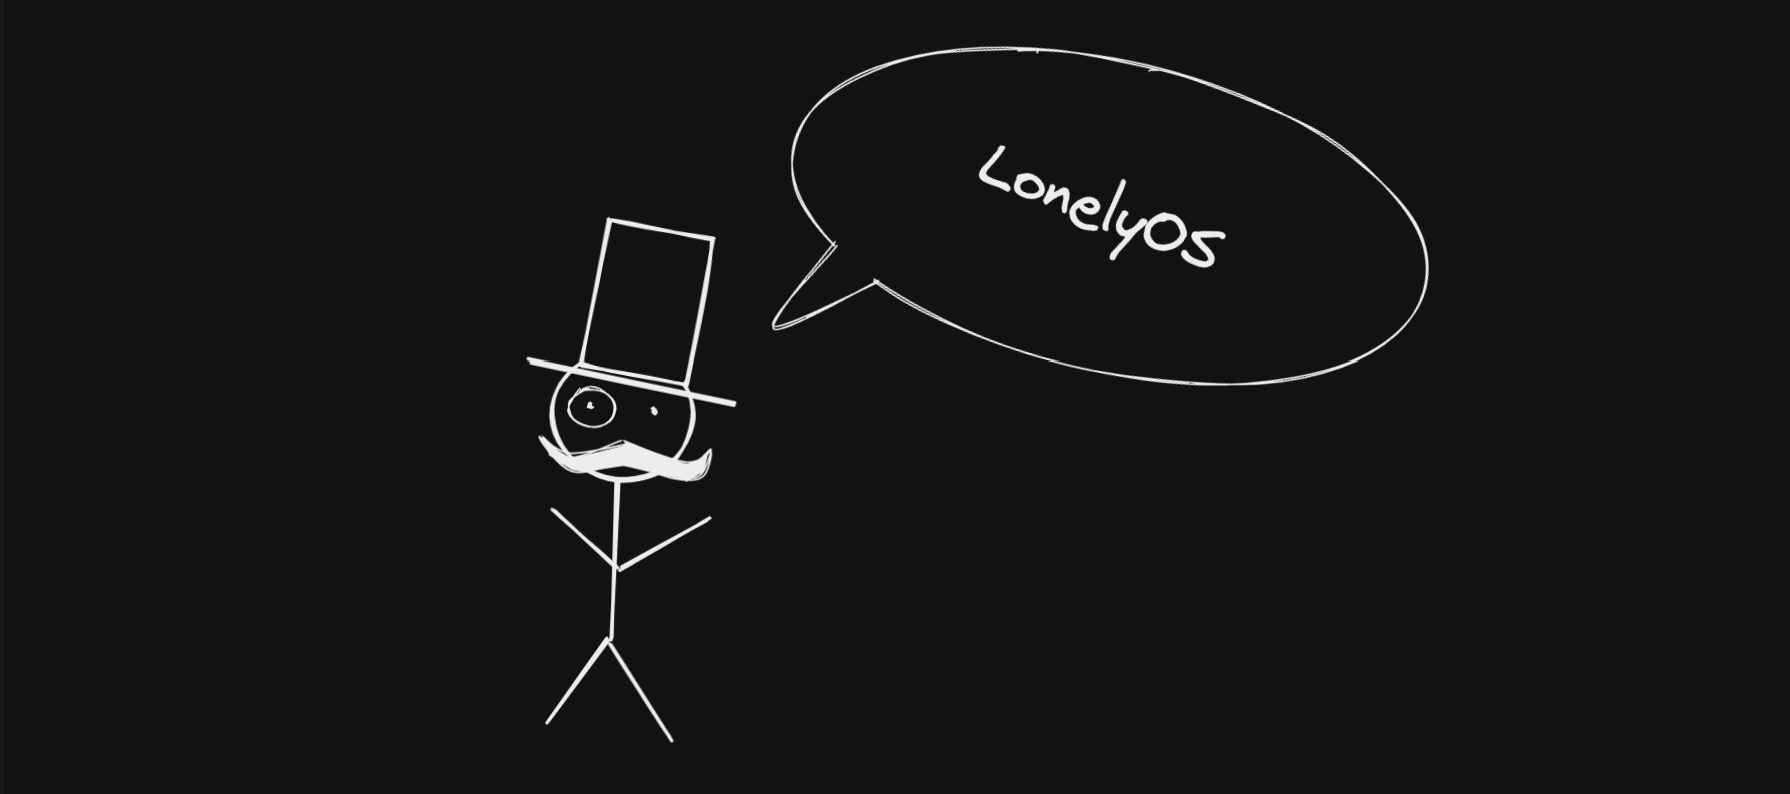 LonelyOS title image 